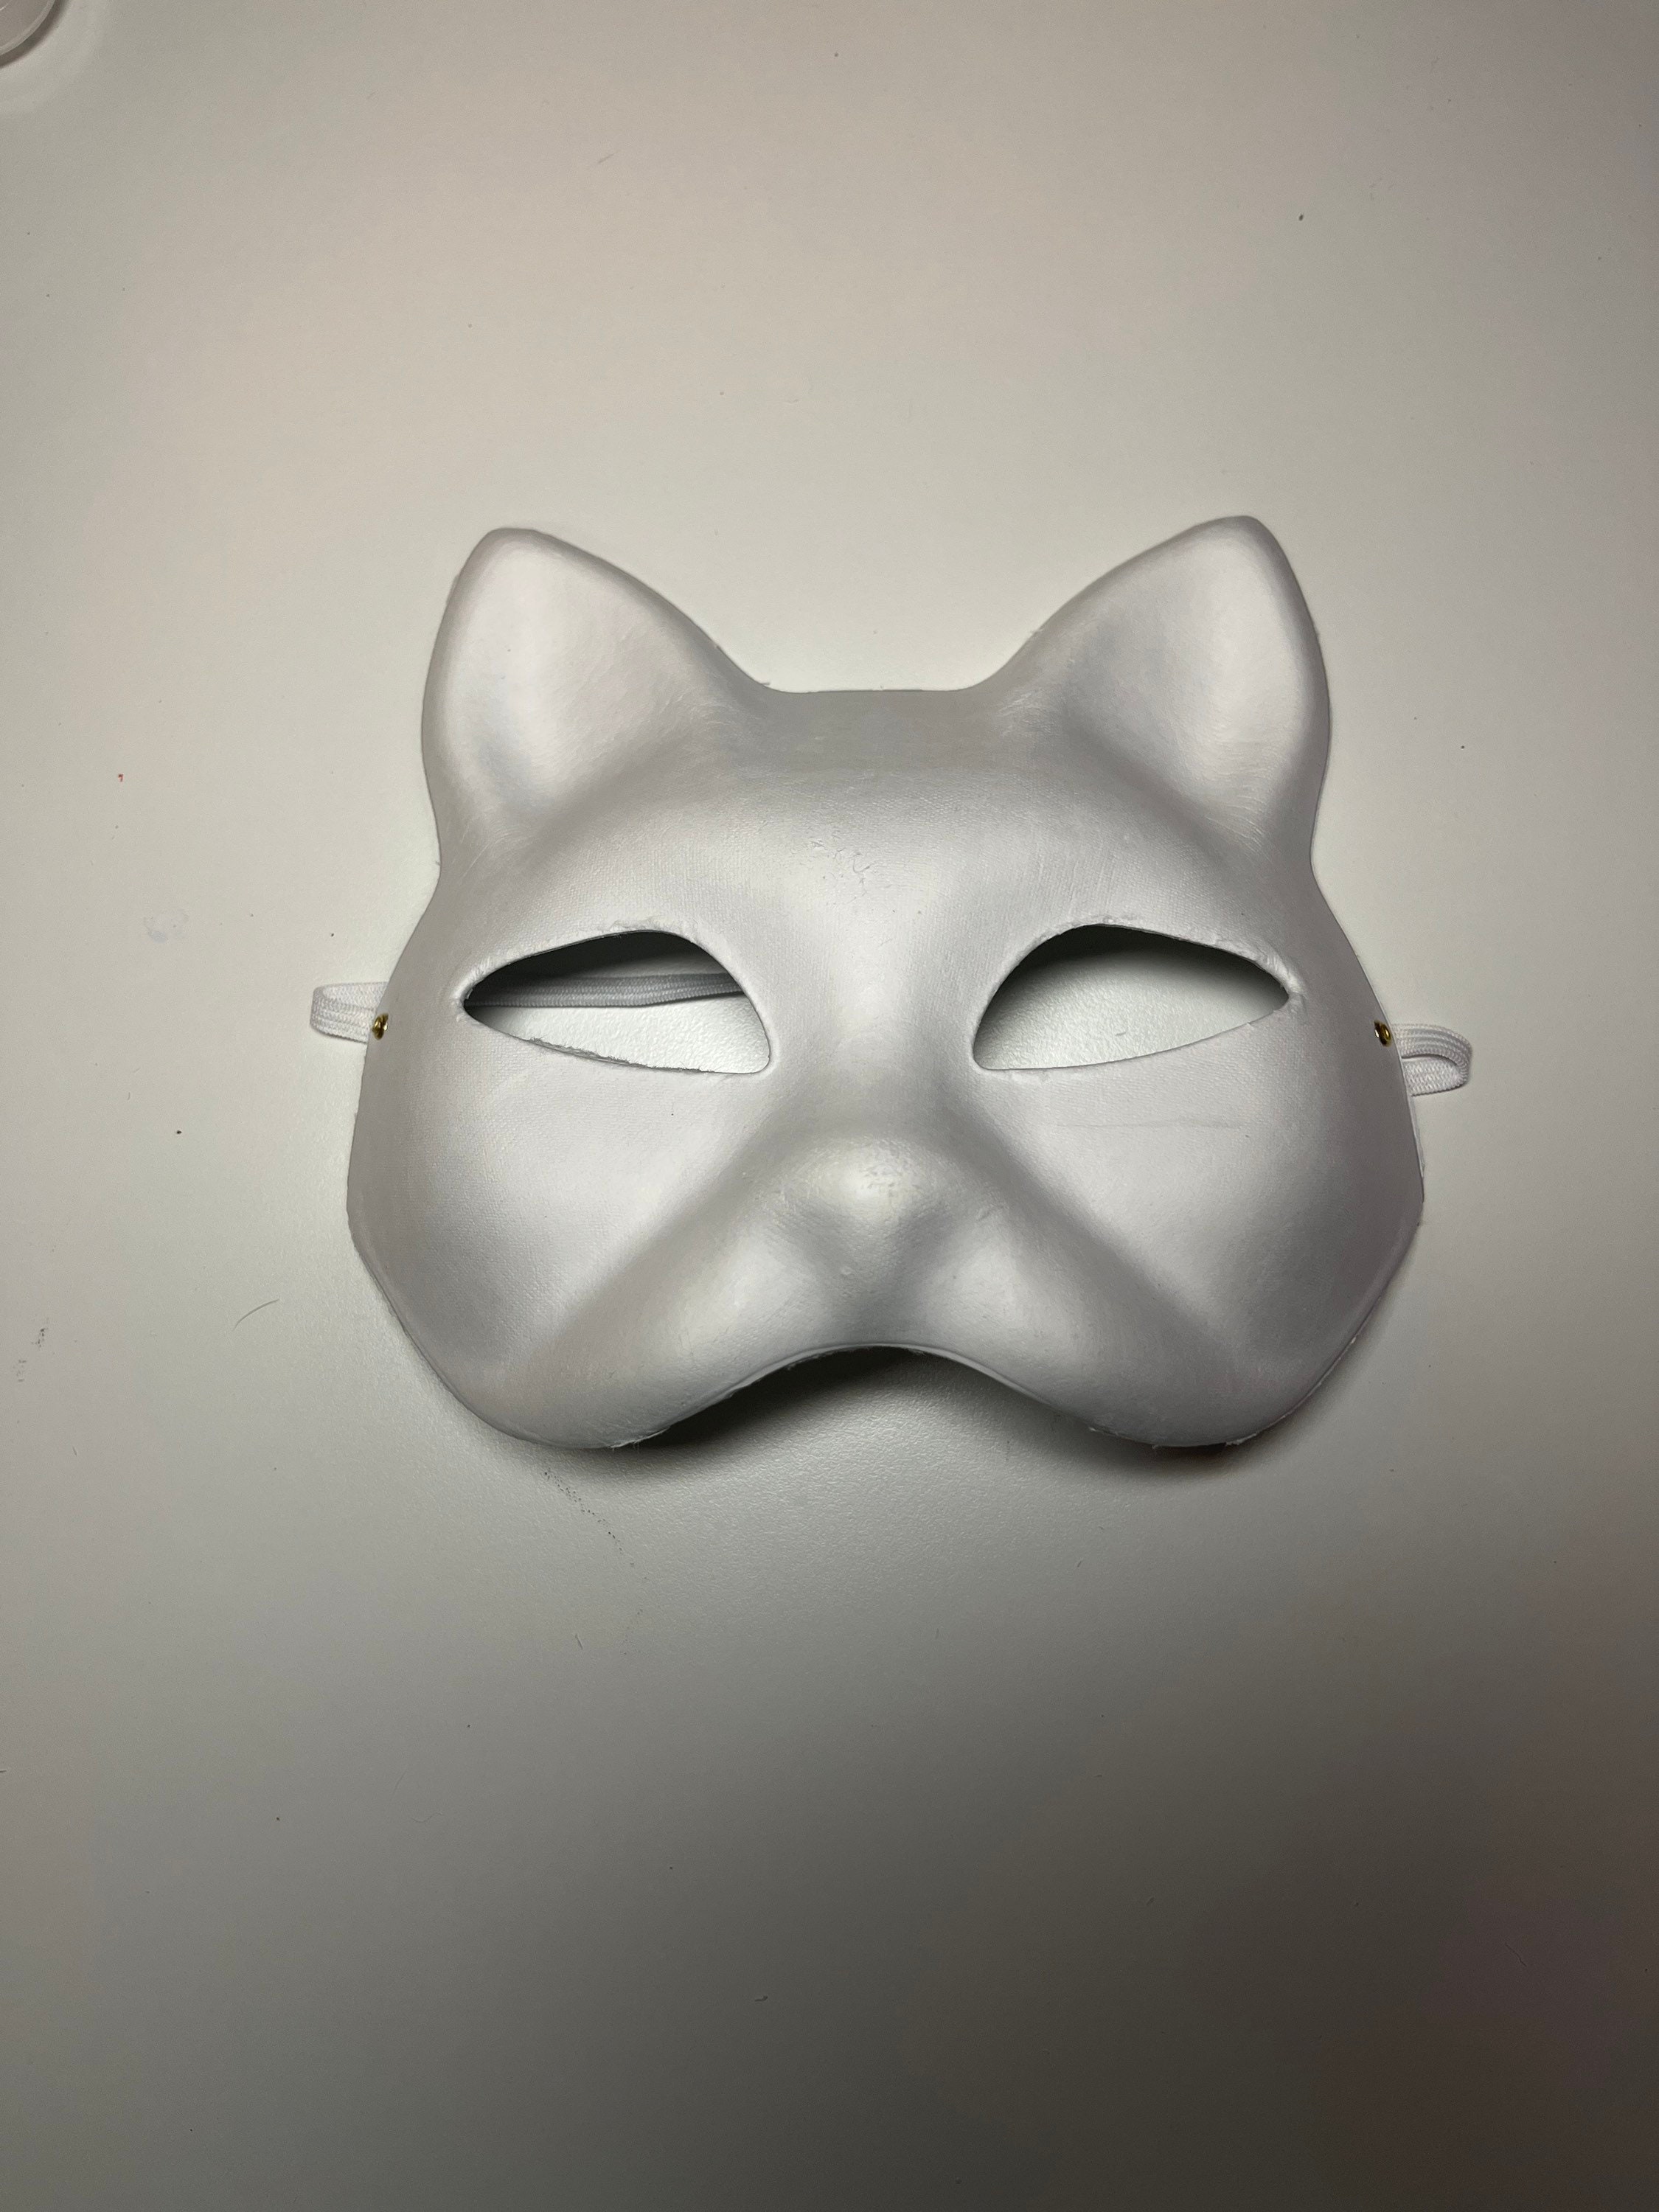  SAFIGLE 5PCS Therian Mask Cat Fox Mask Therian Stuff